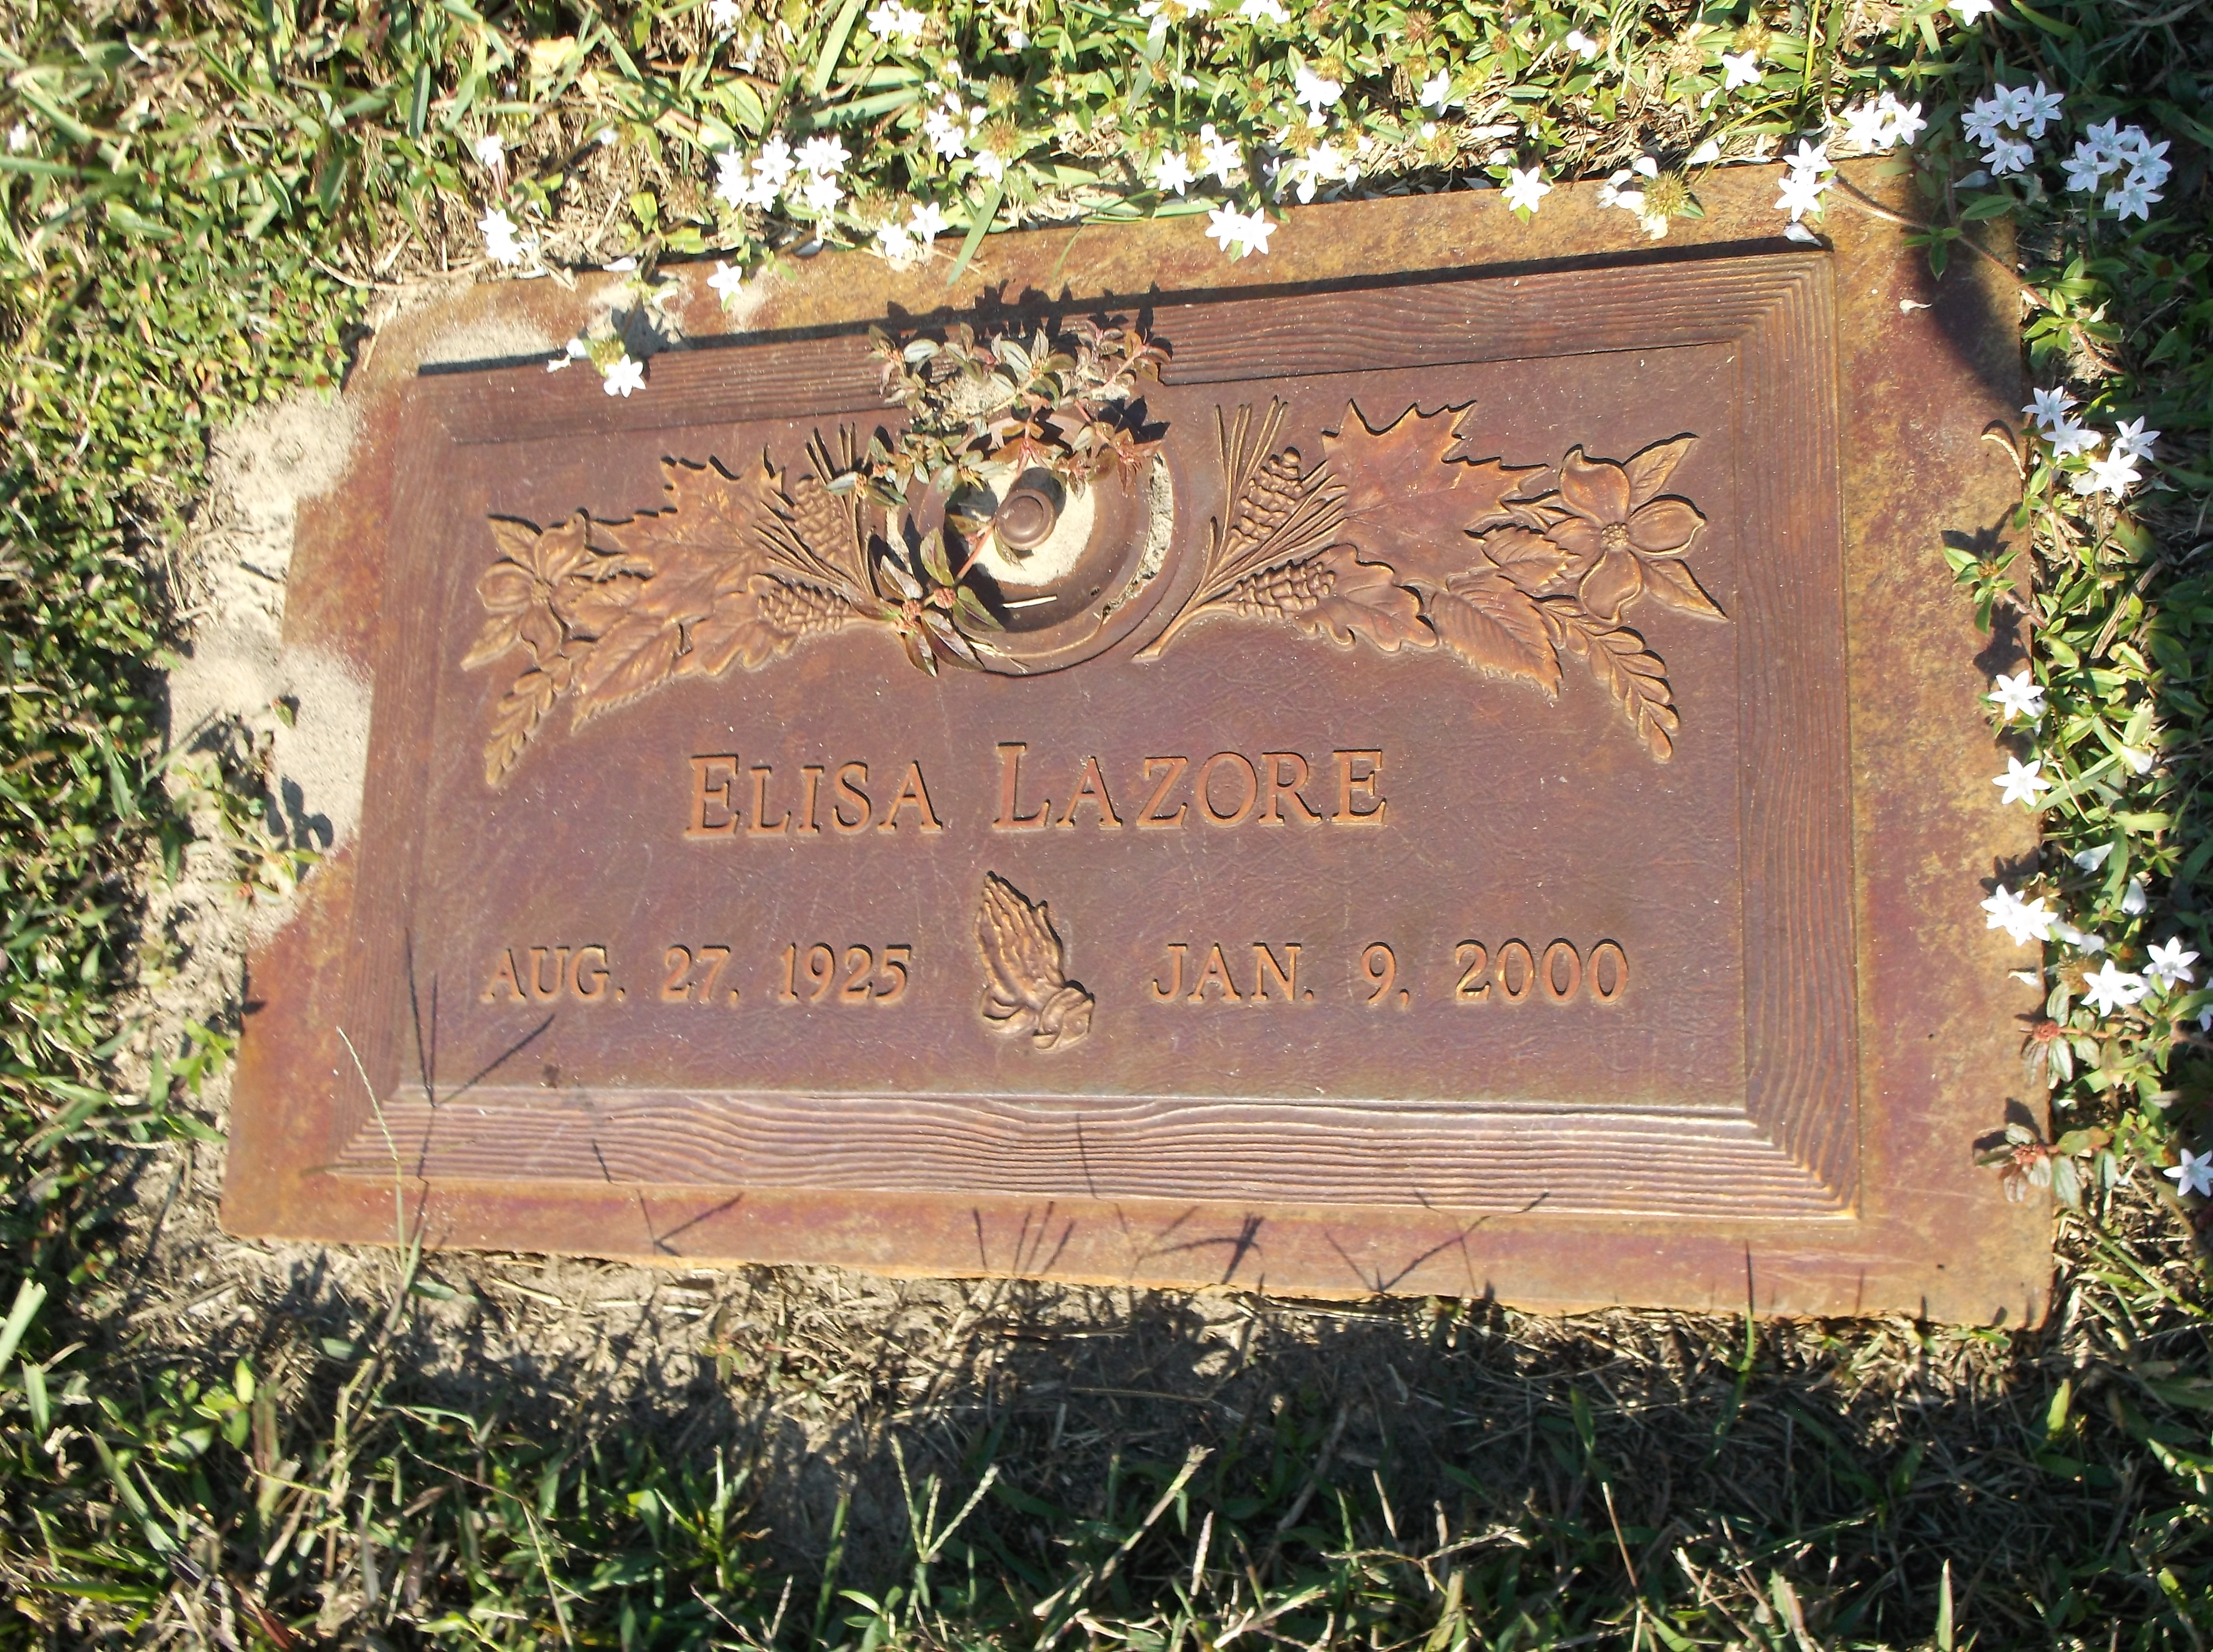 Elisa Lazore